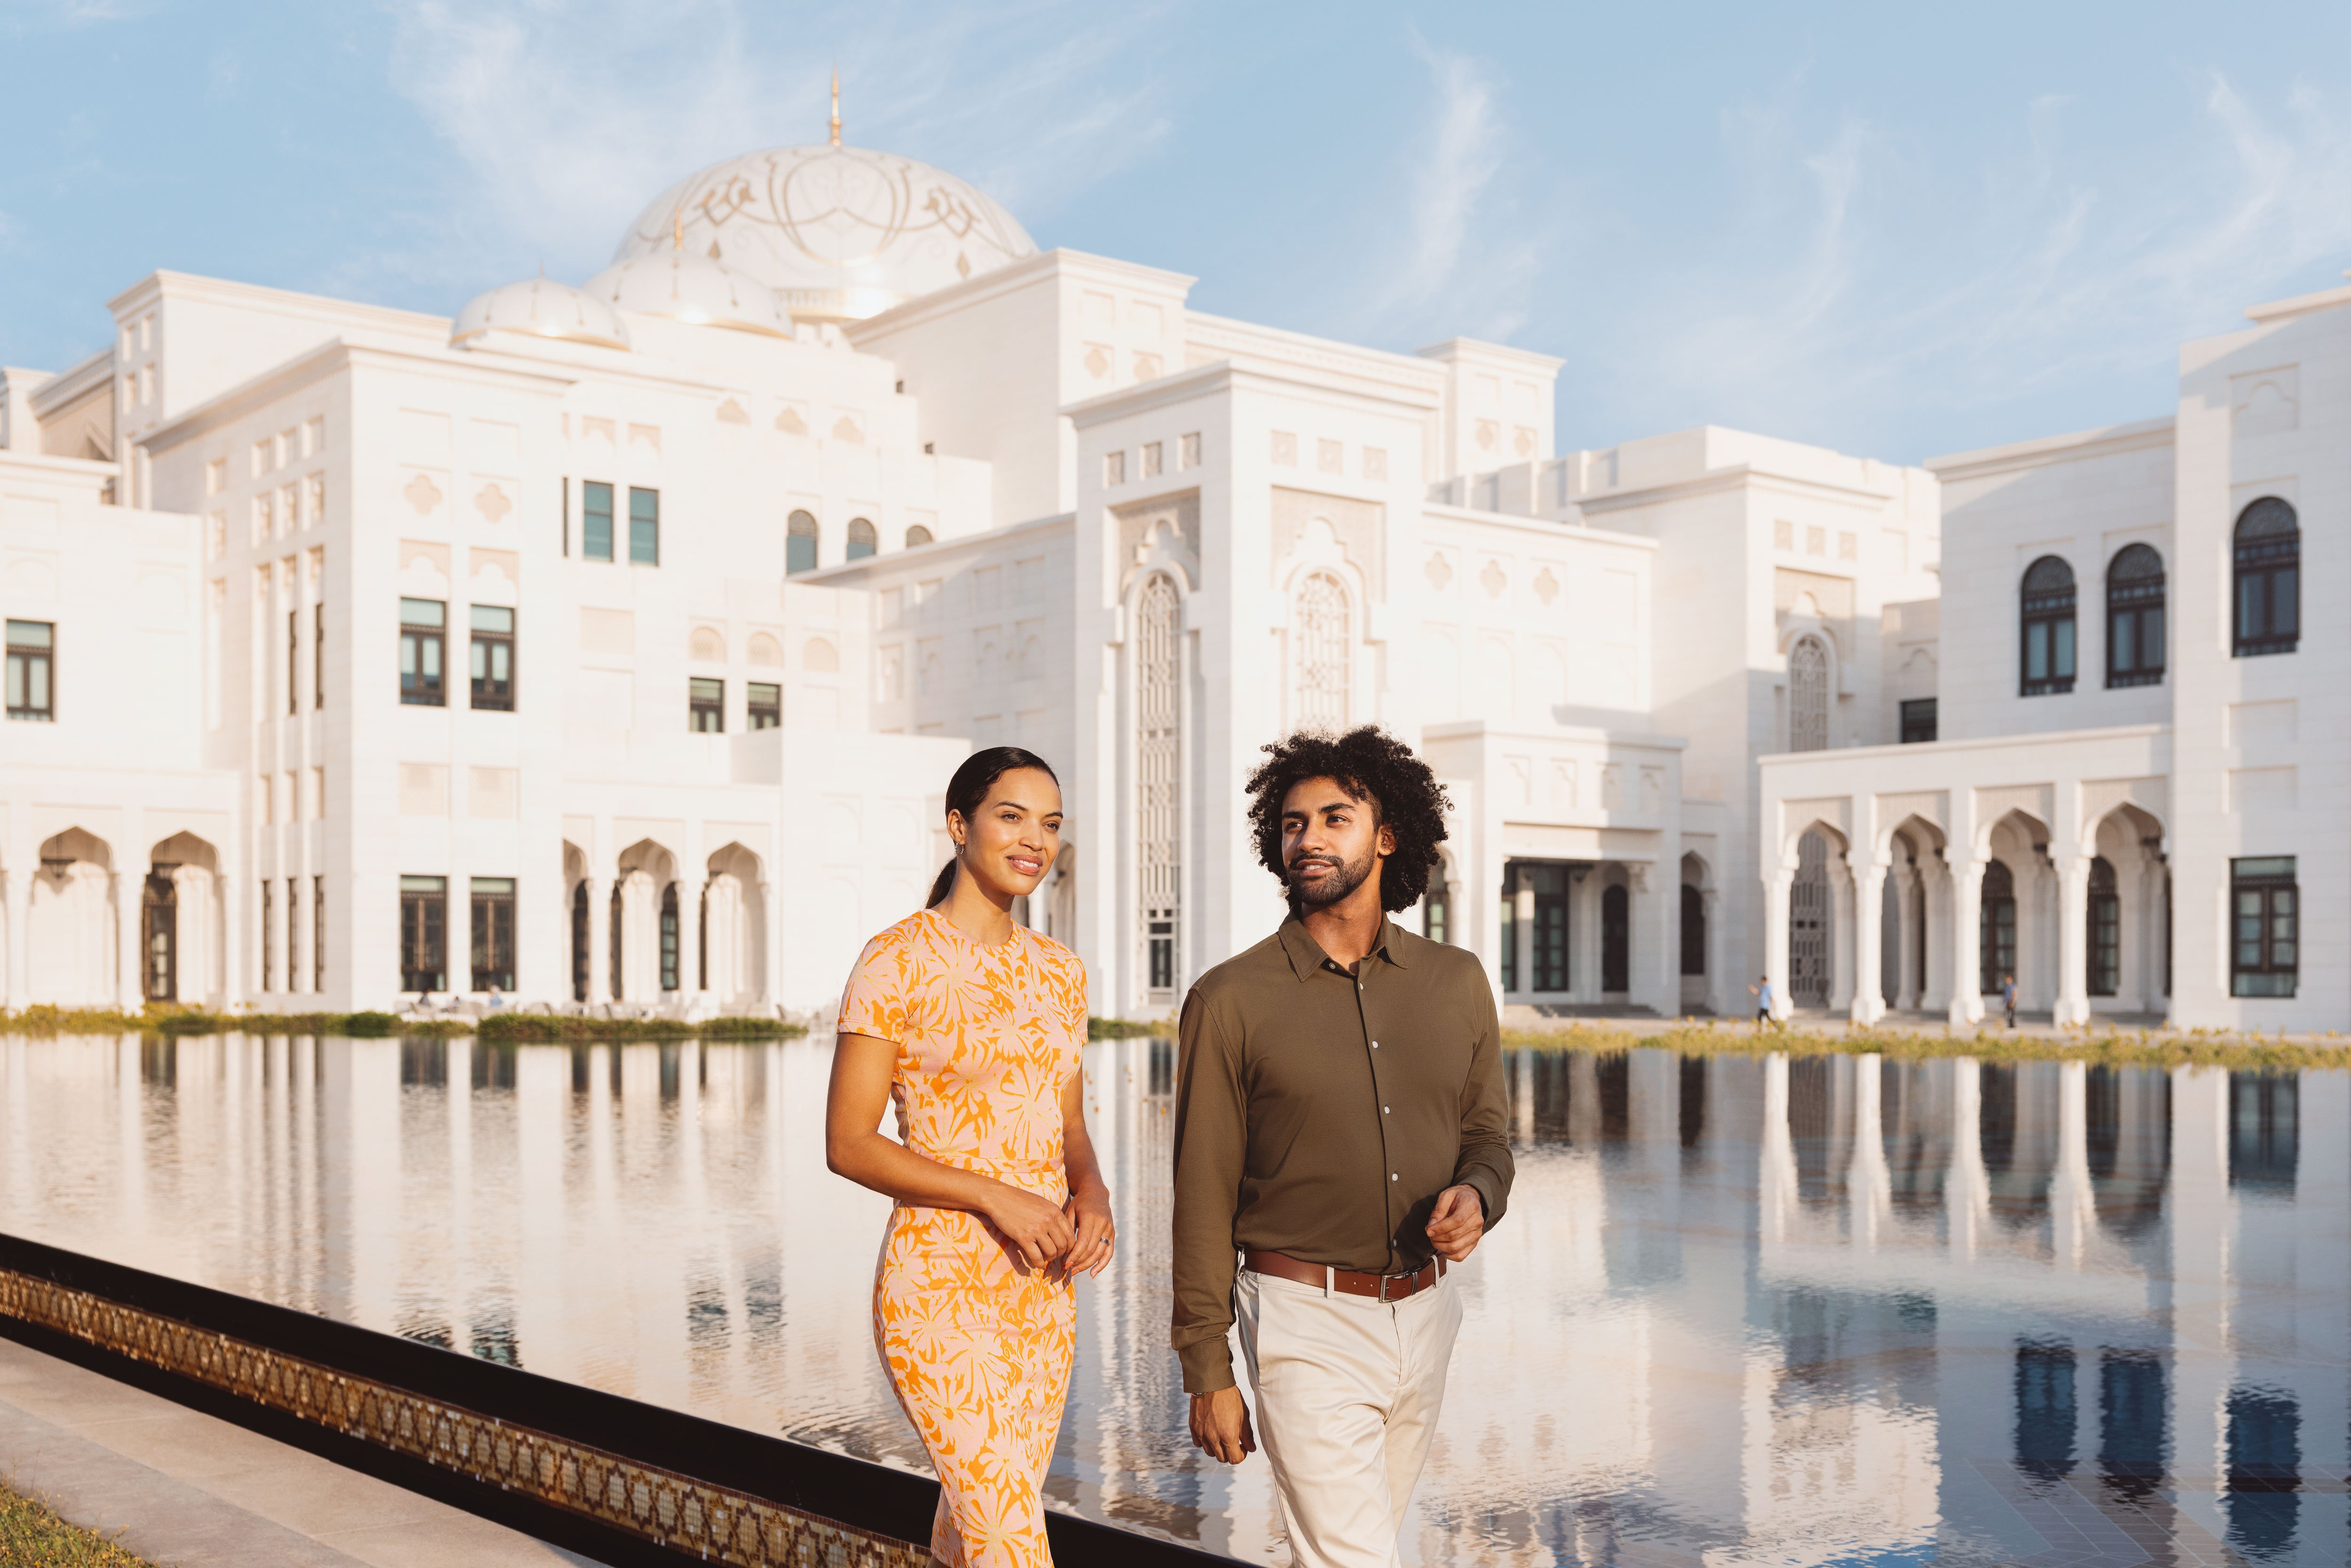 Couple walking outside by the water at Qasr Al Watan palace